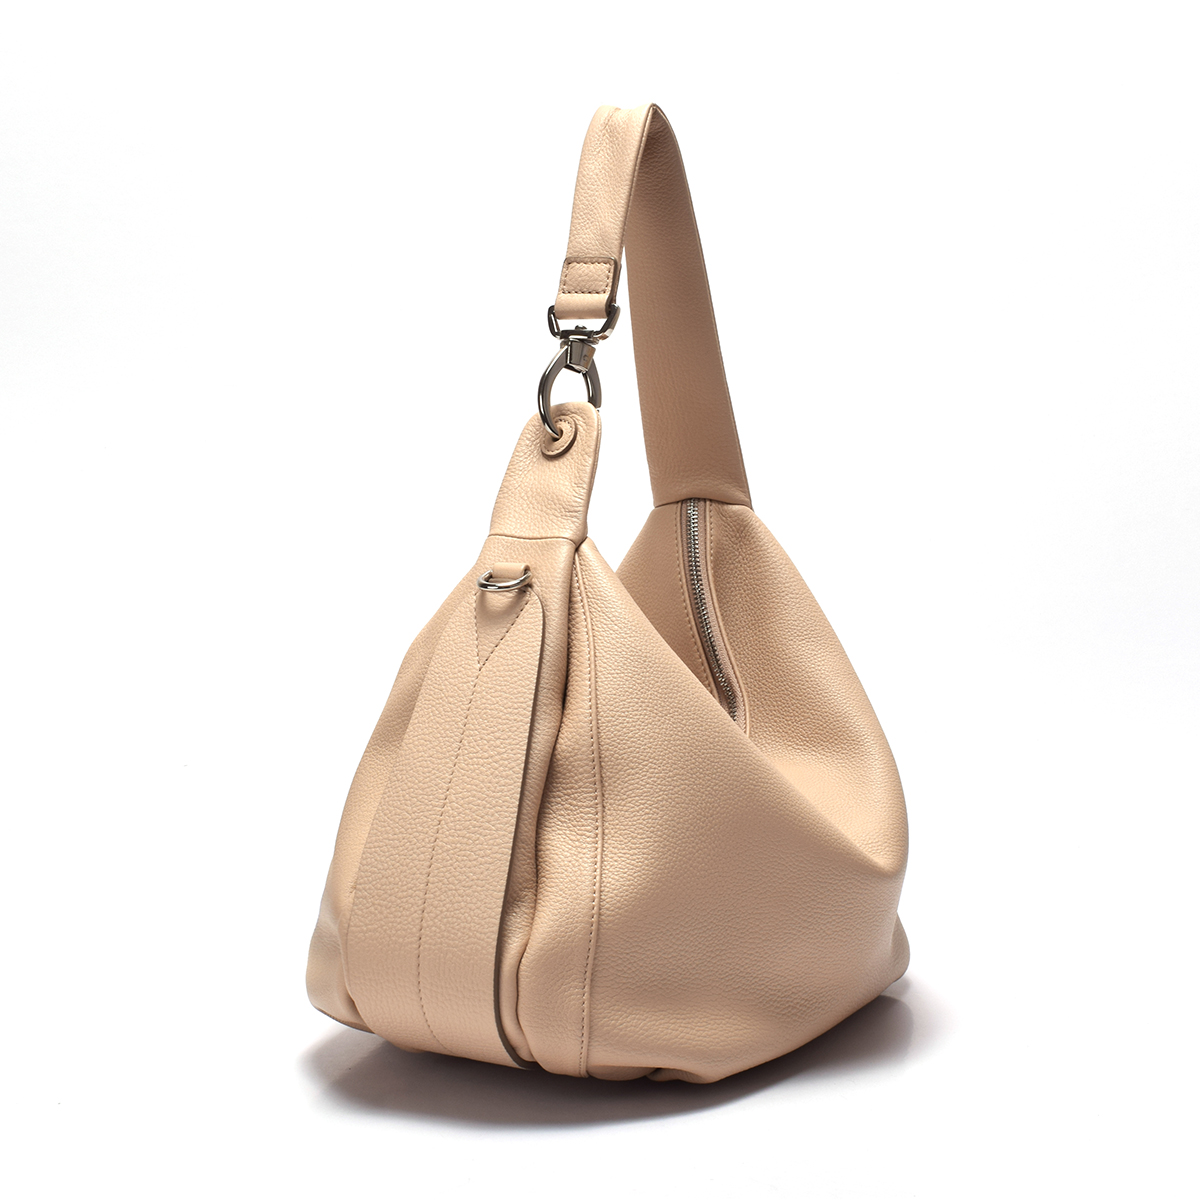 Sanlly custom handbags Suppliers for shopping-2